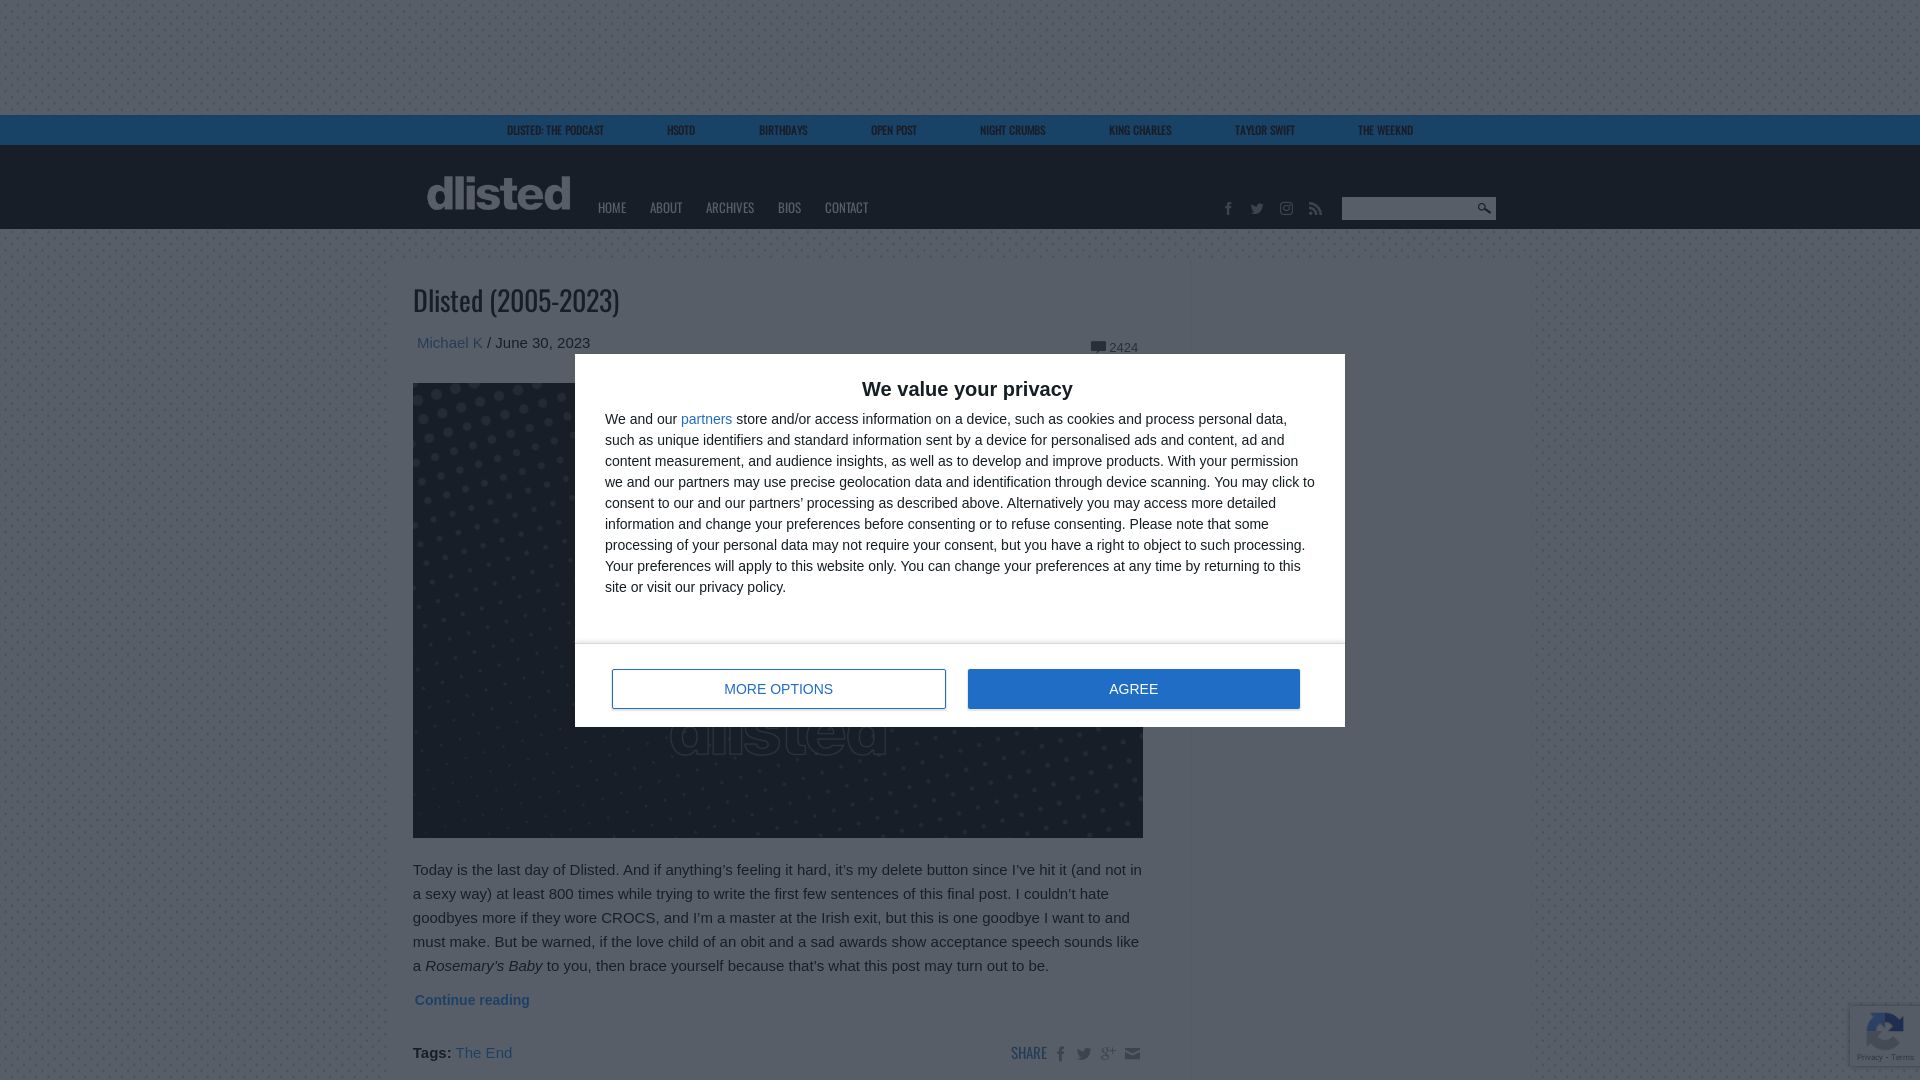 Website status dlisted.com is   ONLINE